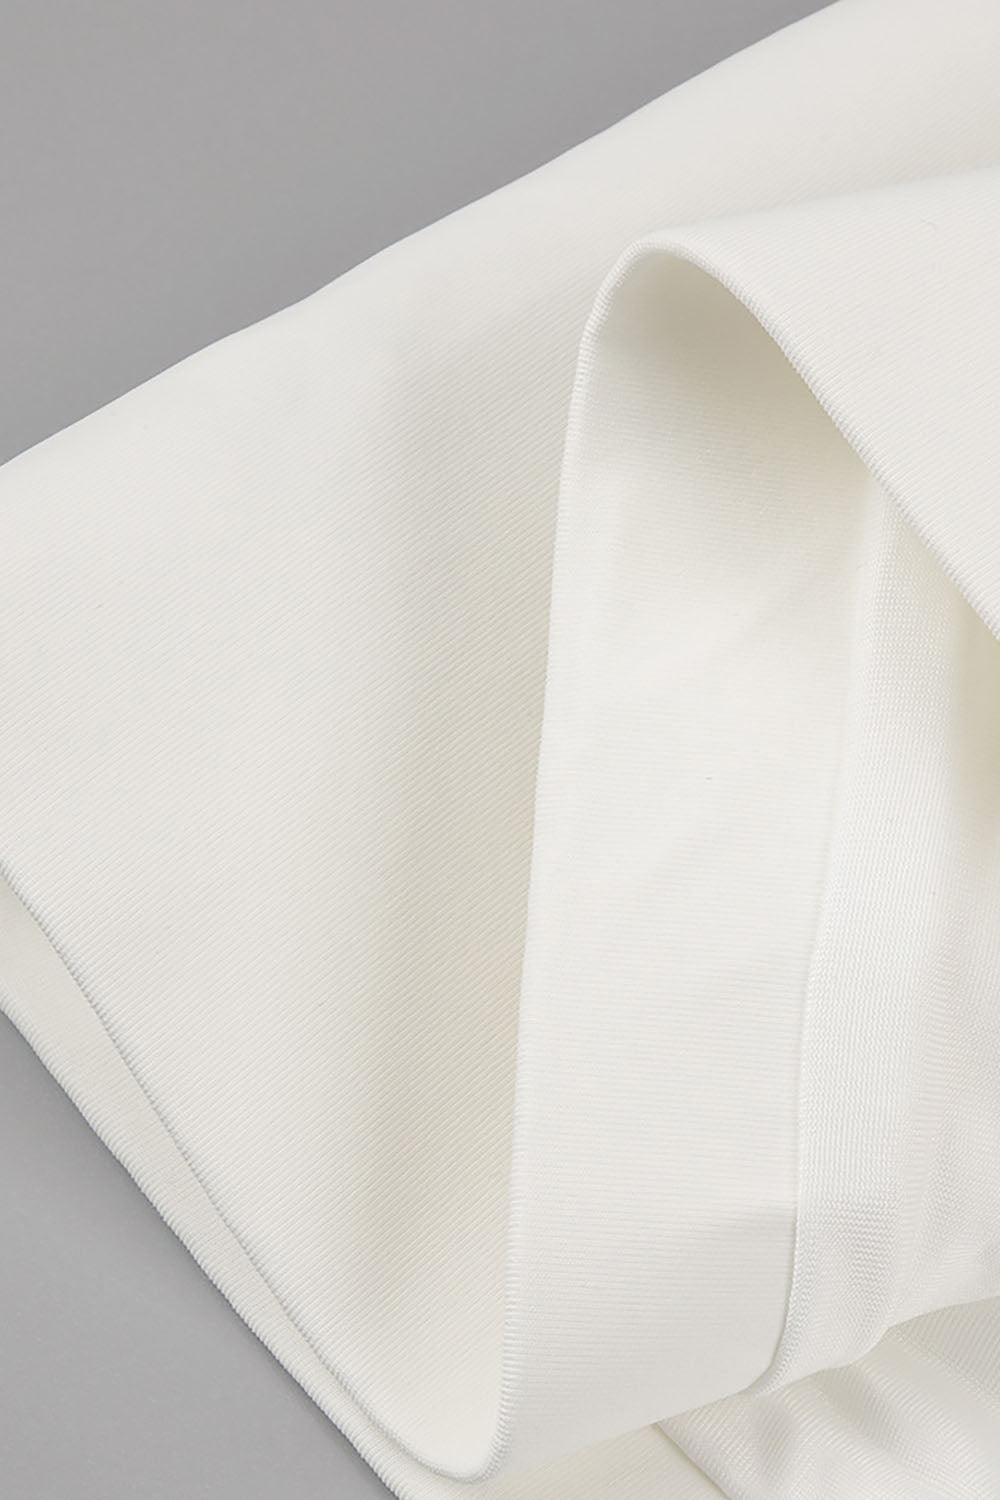 Square Collar Crystal Rhinestone-Trim White Dress